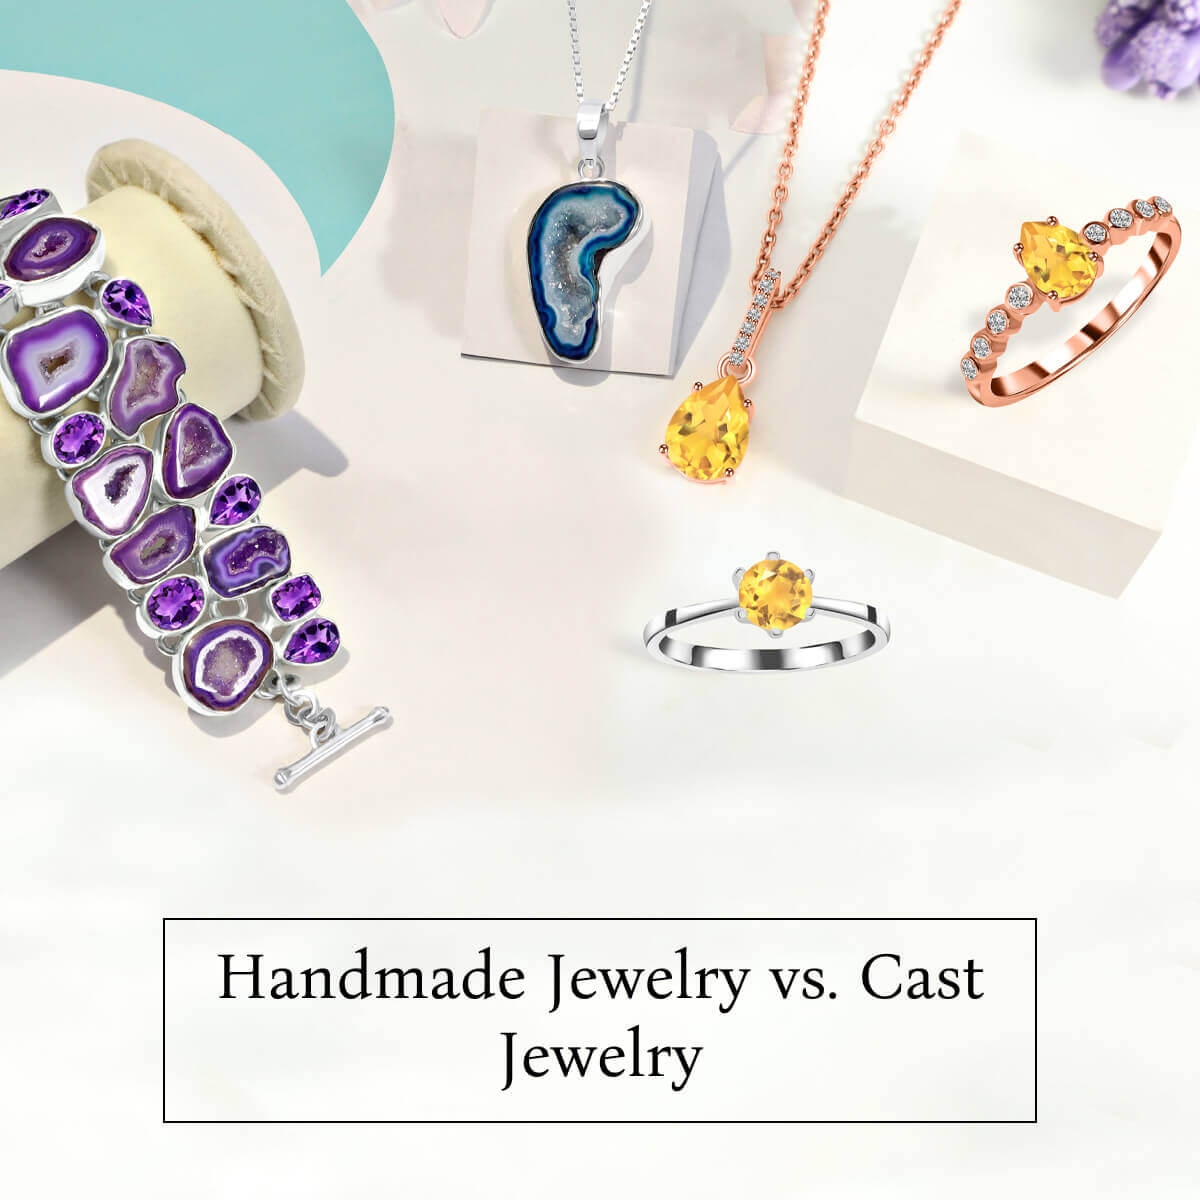 Handmade Jewelry vs. Cast Jewelry